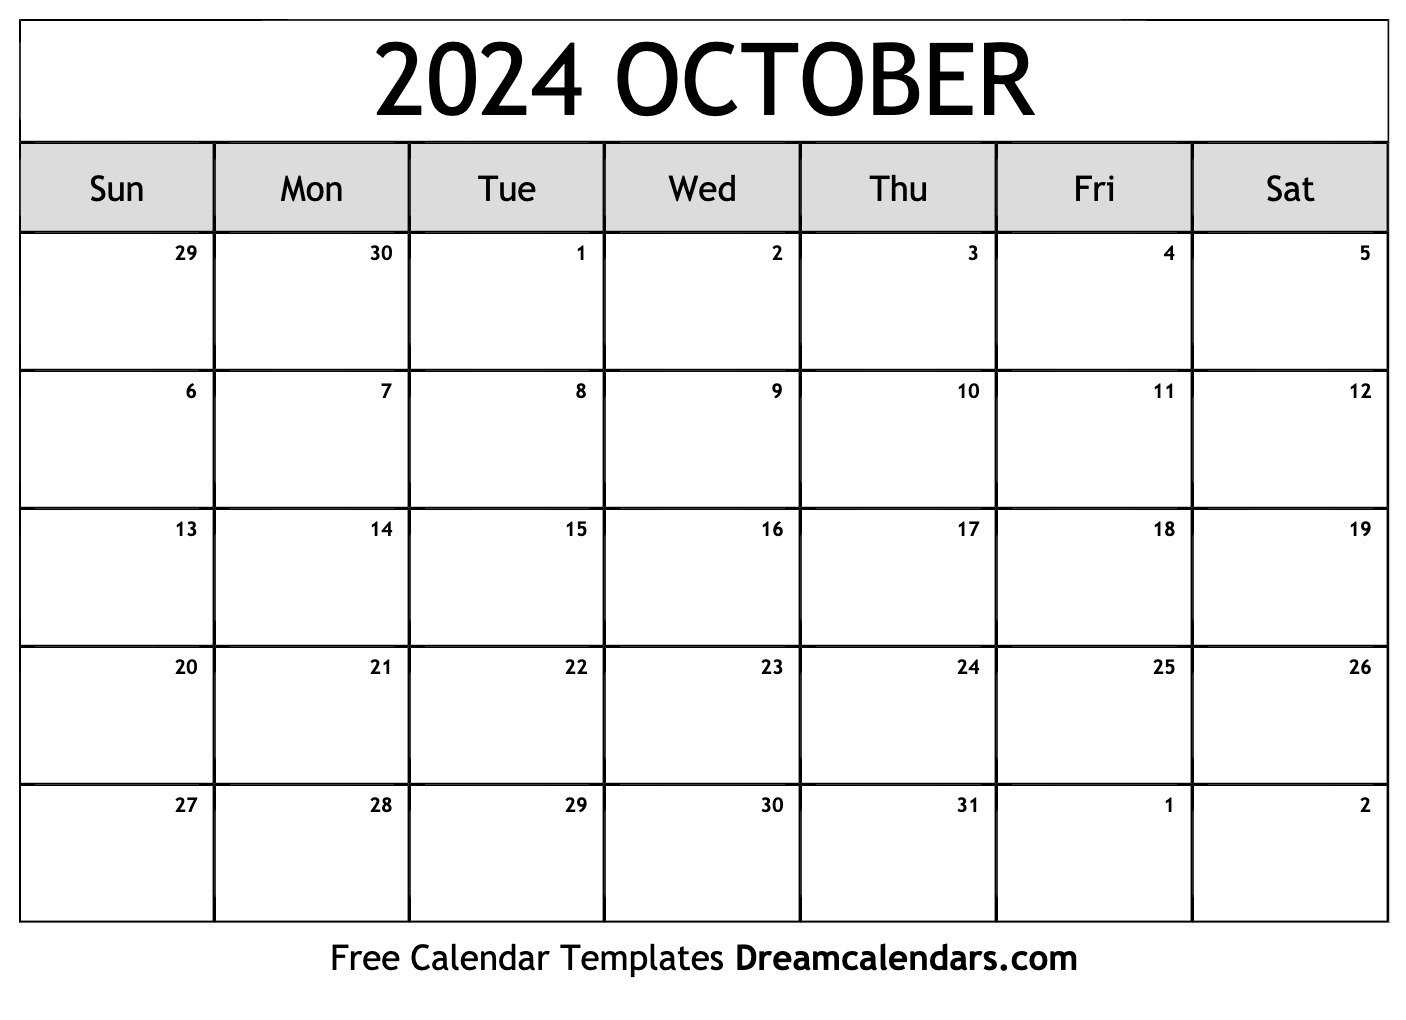 October 2024 Calendar | Free Blank Printable With Holidays regarding Free Printable Calendar 2024 October And November